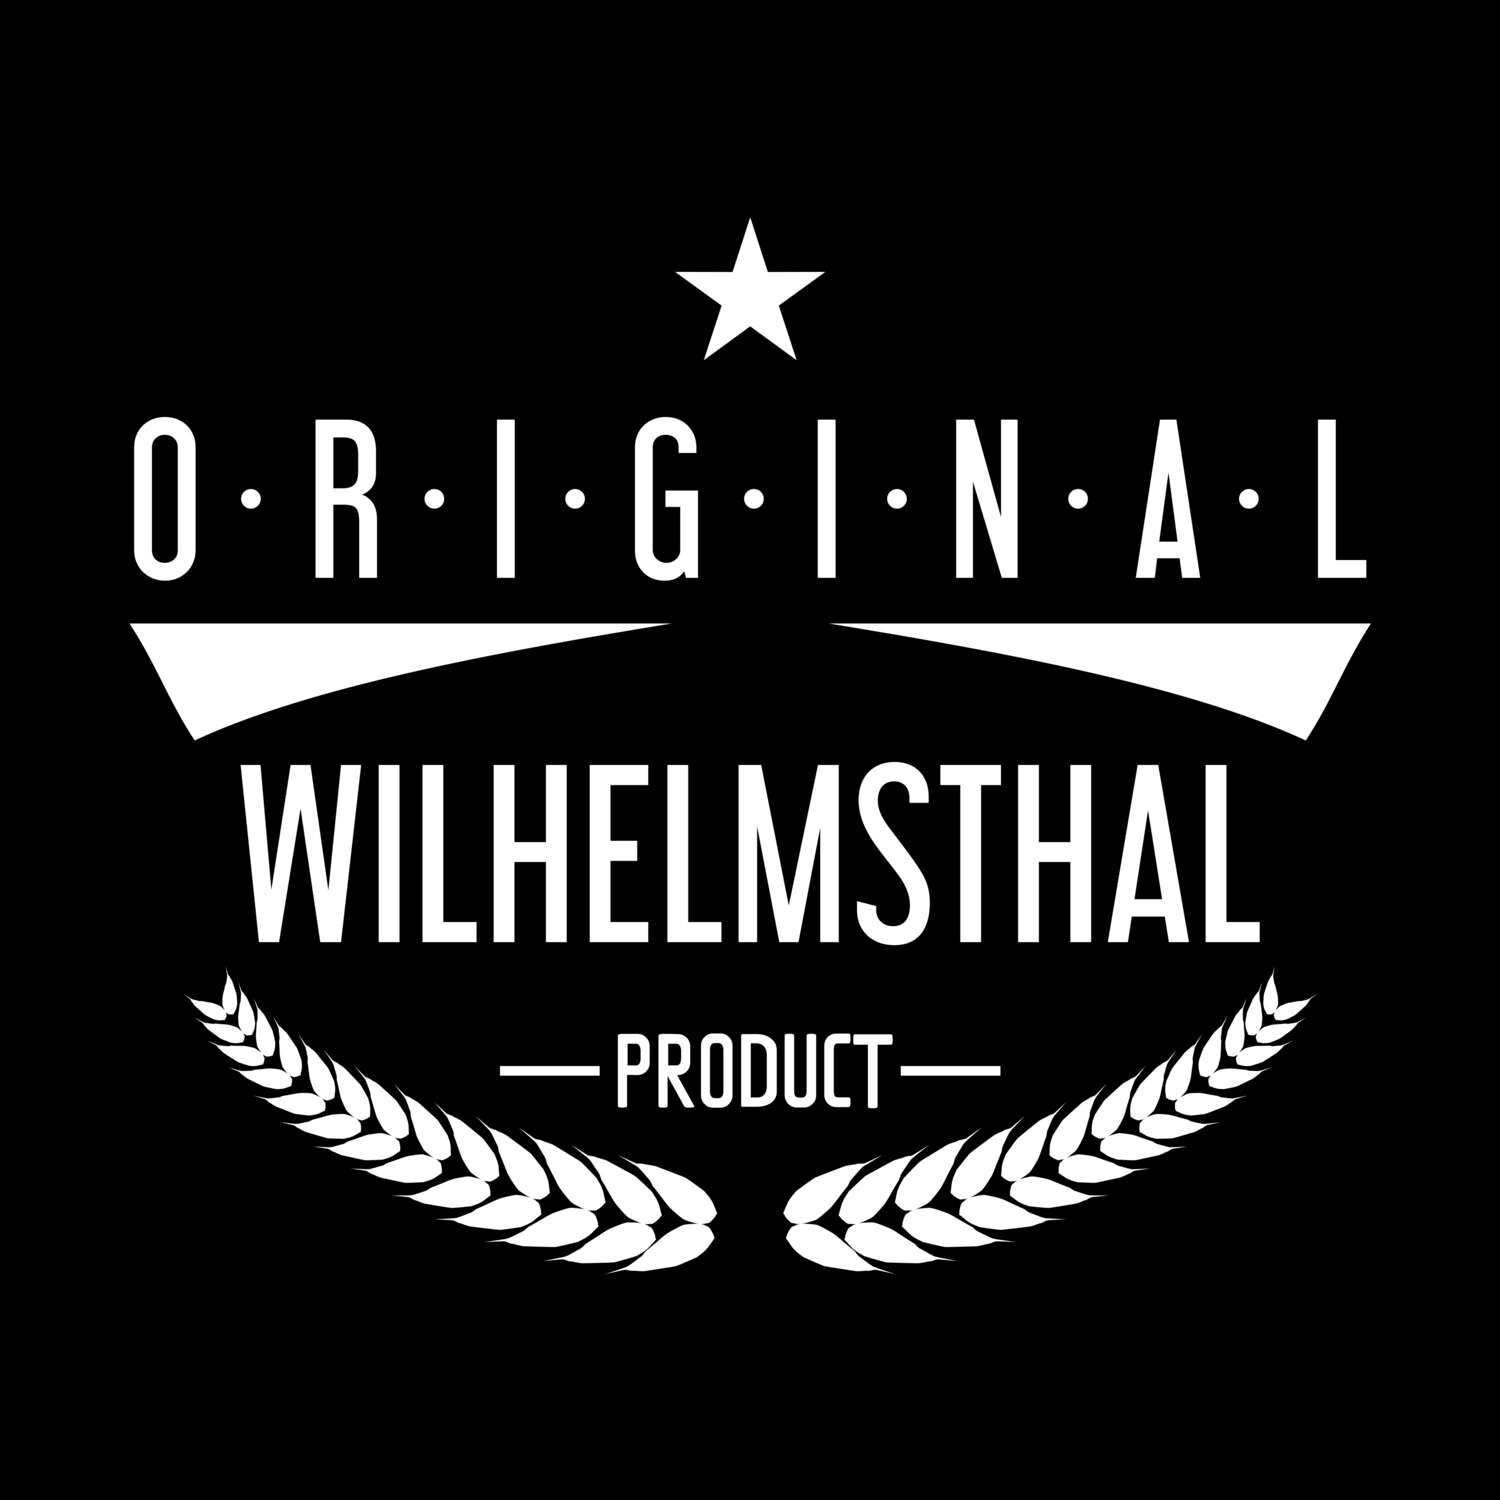 Wilhelmsthal T-Shirt »Original Product«